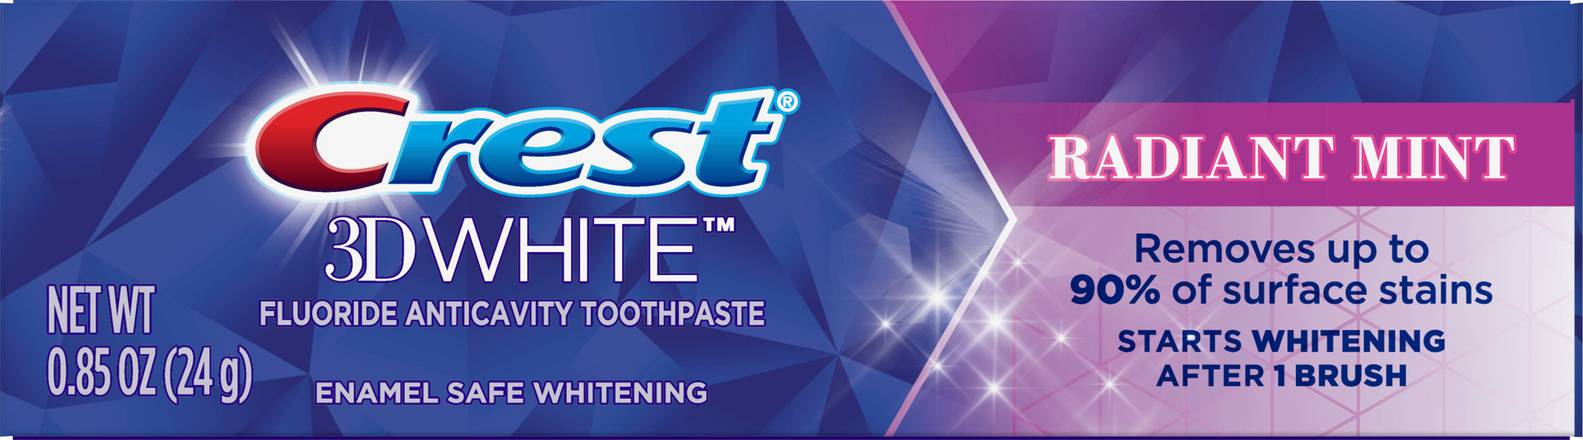 Crest 3D White, Whitening Toothpaste Radiant Mint (0.9 oz)